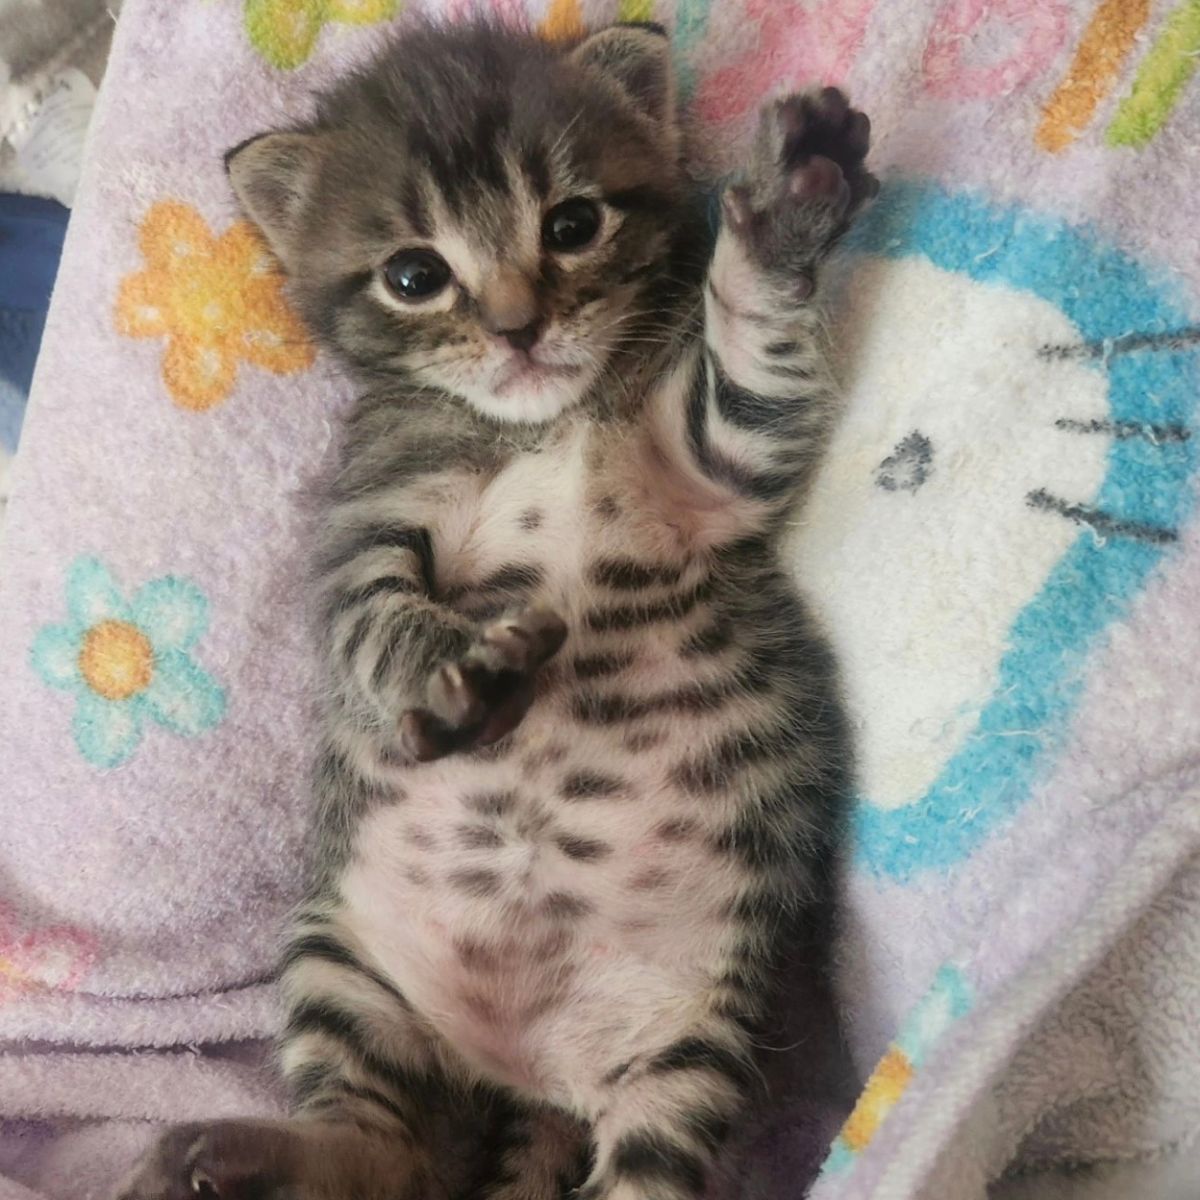 photo of kitten lying on its back